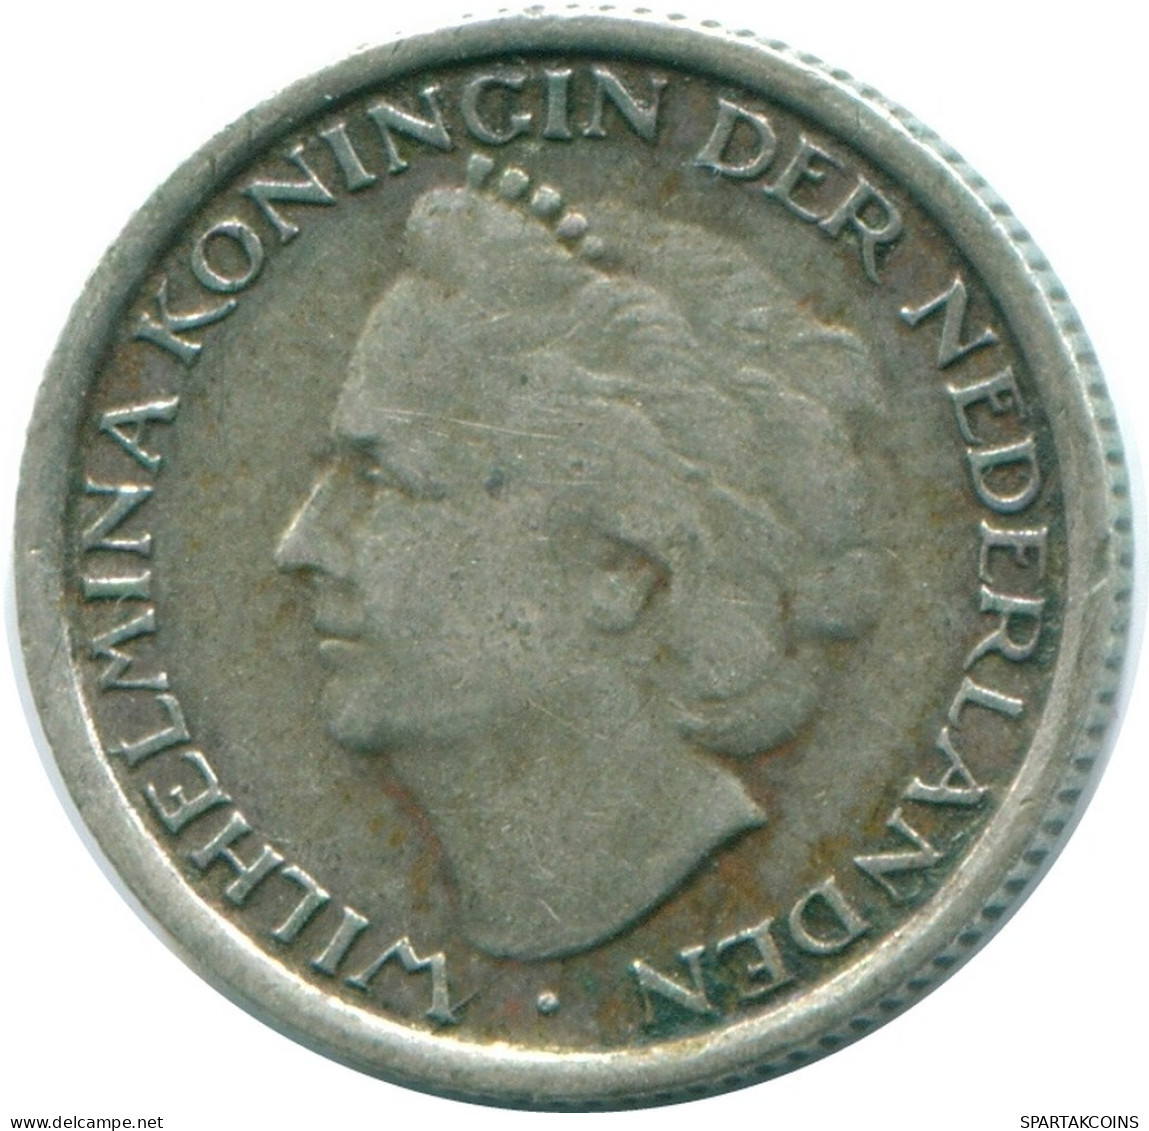 1/10 GULDEN 1948 CURACAO Netherlands SILVER Colonial Coin #NL11978.3.U.A - Curacao